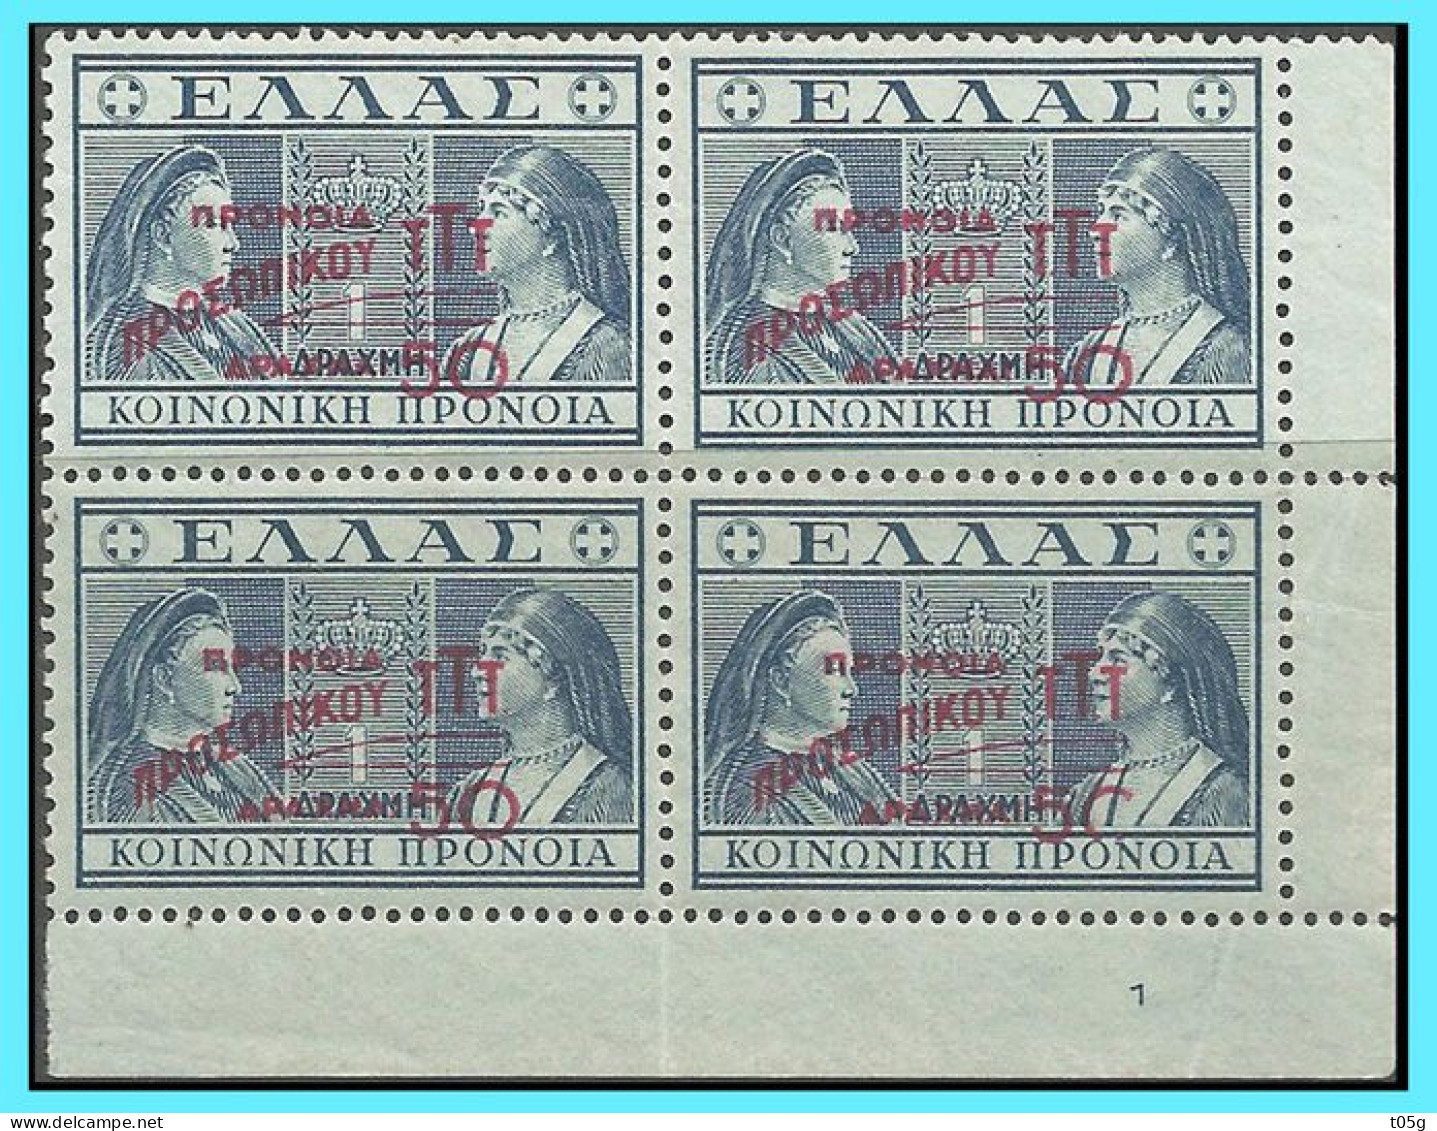 GREECE-GRECE - HELLAS 1946-50:  10drx / 50L Charity Stamps (with delcaque overprint) Block/4  Set MNH** - Bienfaisance